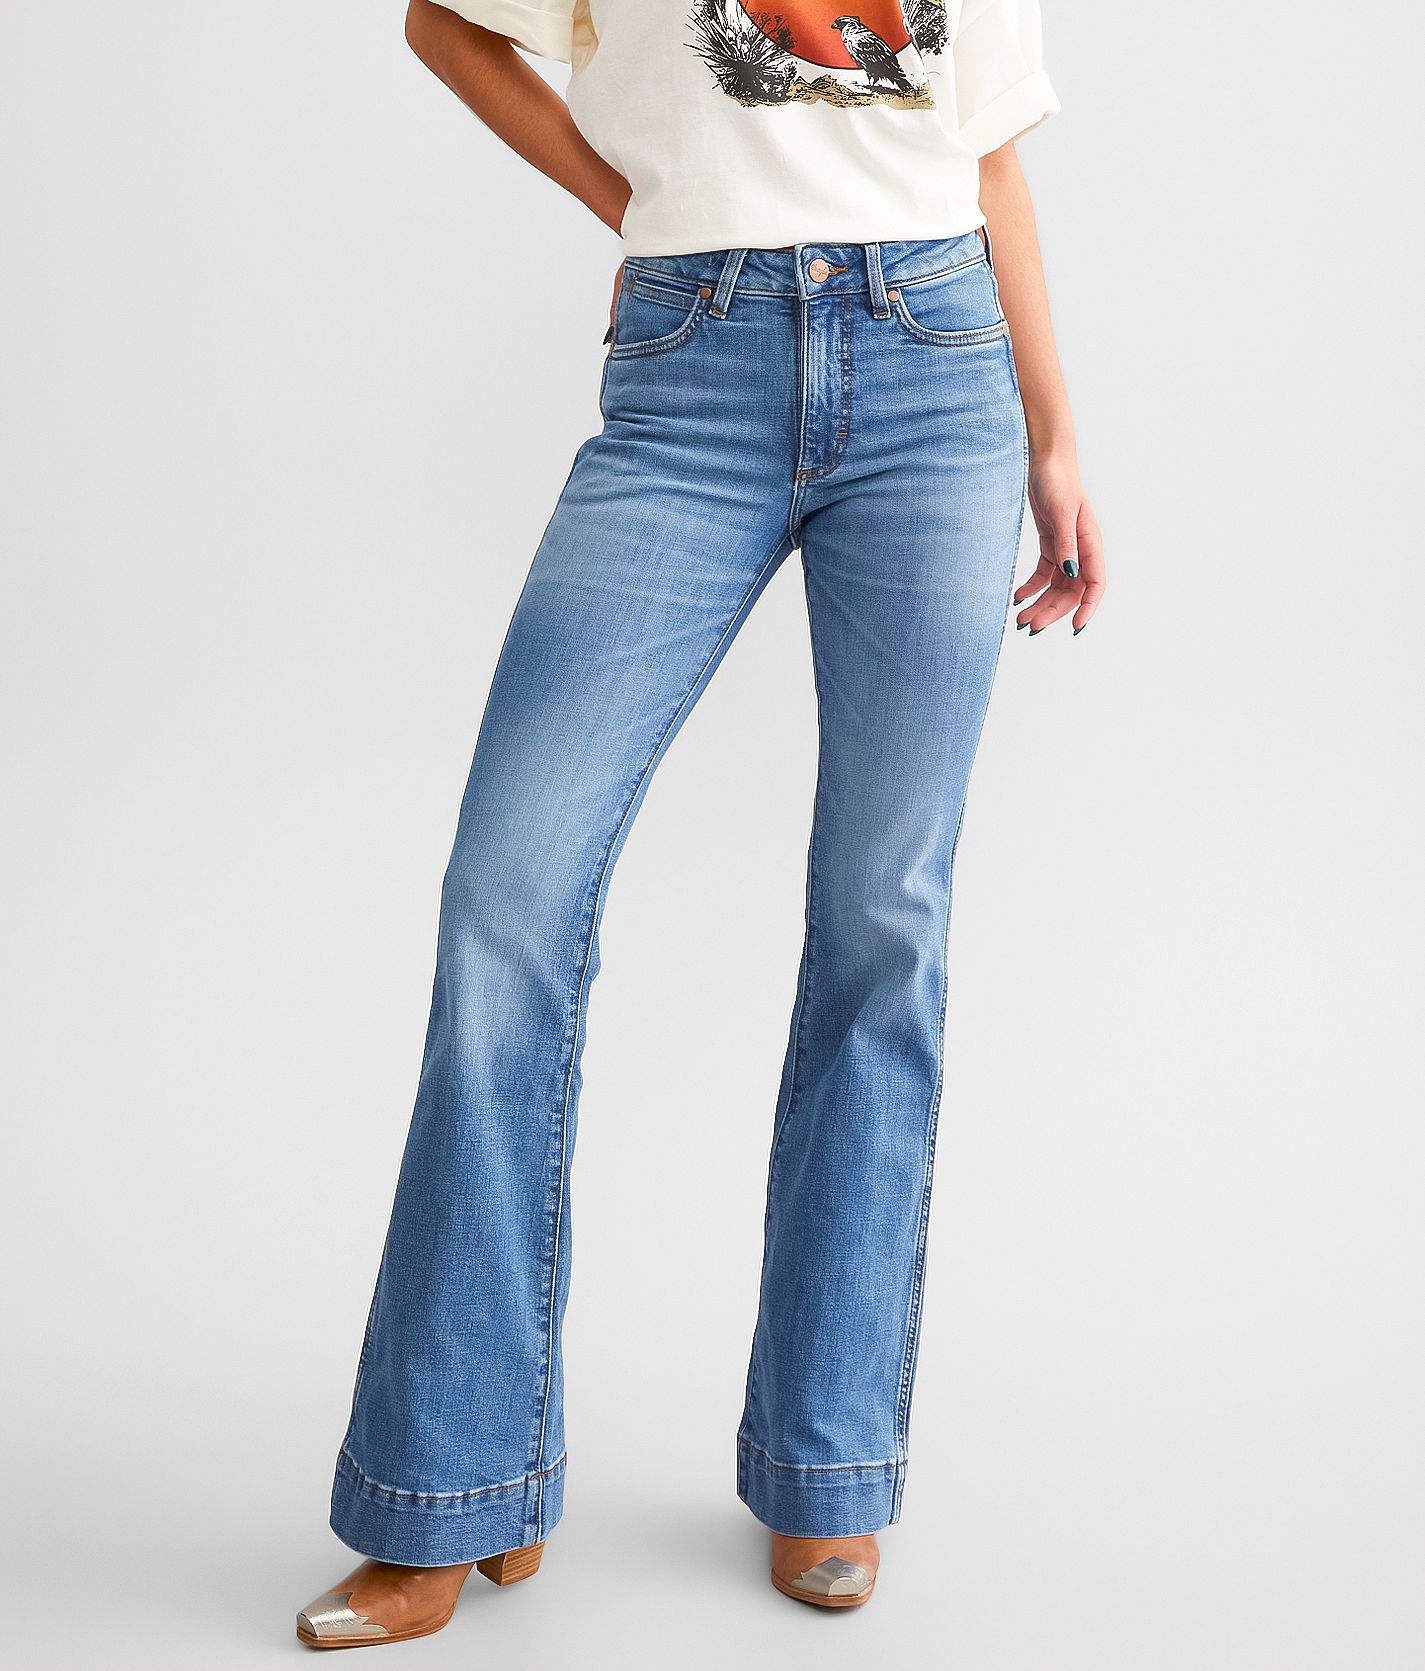 Retro Trouser Stretch Jean